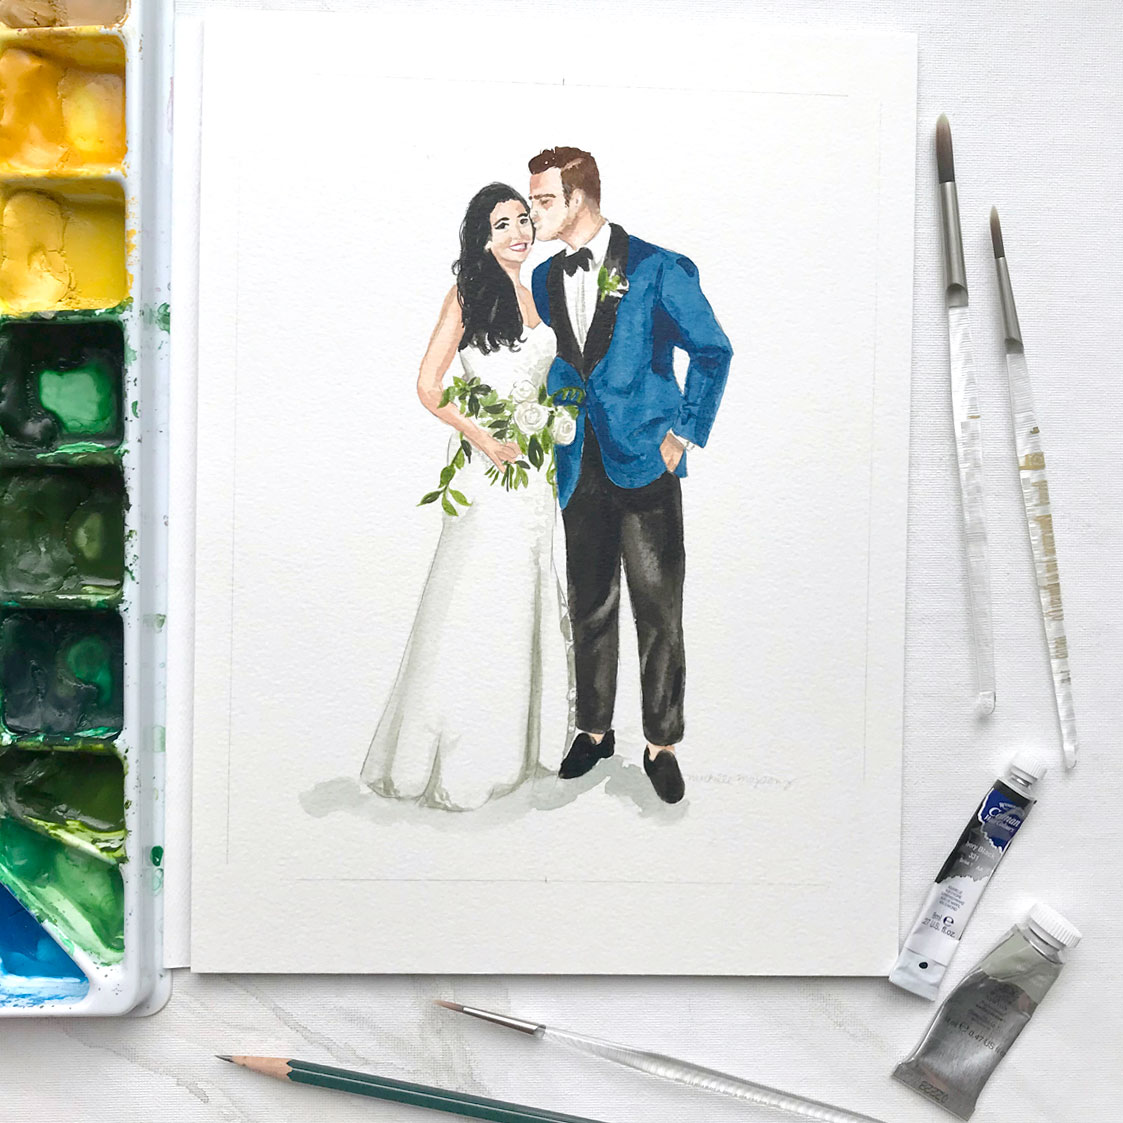 Hand-painted watercolor wedding portrait illustration by artist Michelle Mospens. - MospensStudio.com